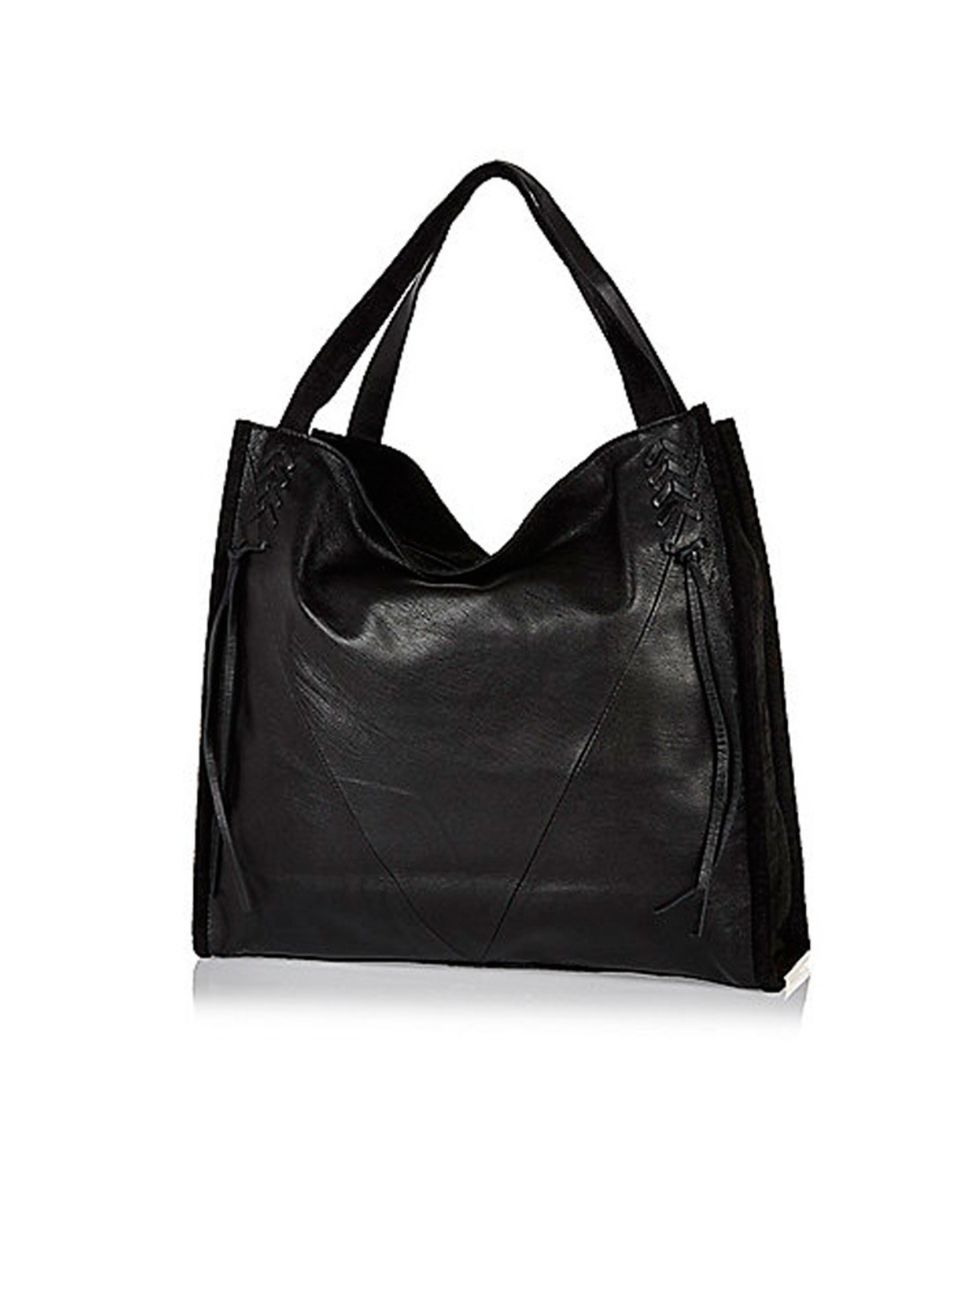 <p><a href="http://www.riverisland.com/women/bags--purses/shopper--tote-bags/black-leather-tote-handbag-674051" target="_blank">River Island</a> tote, £48</p>